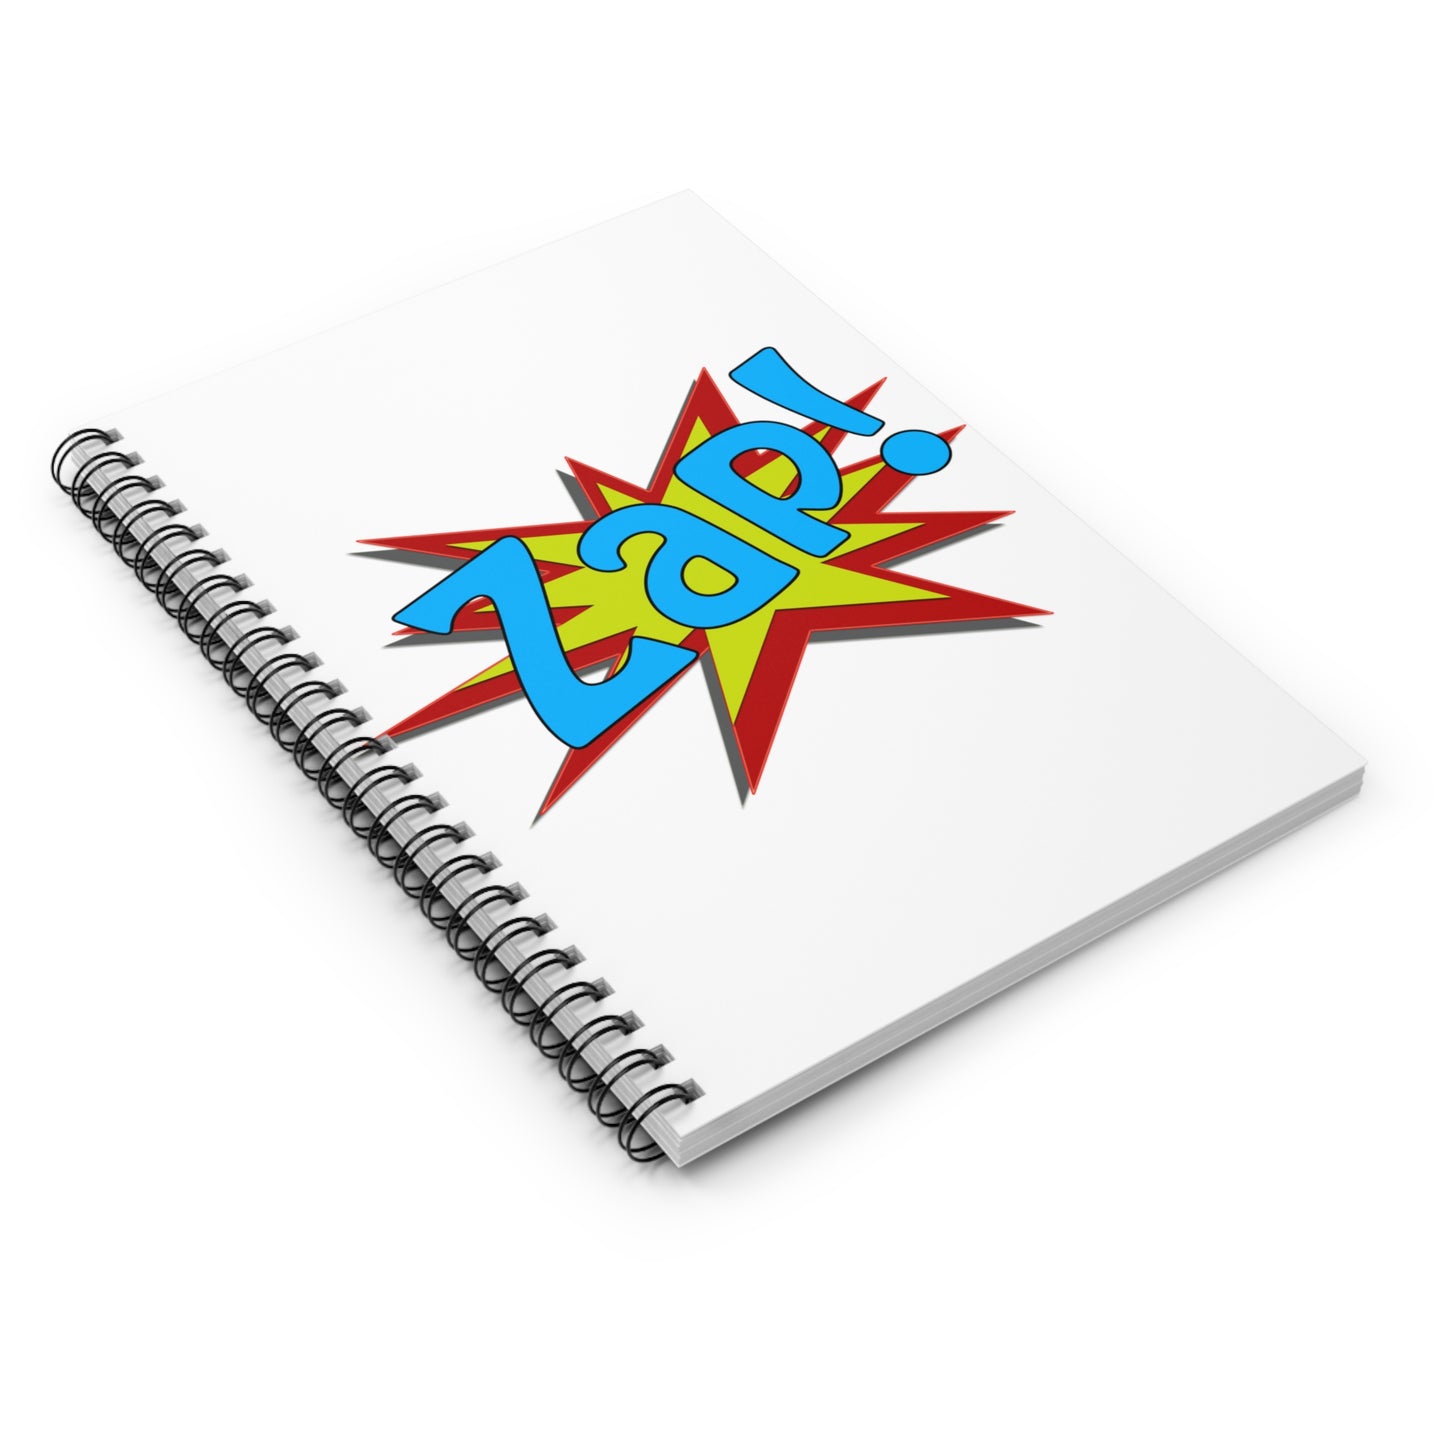 Superhero ZAP: Spiral Notebook - Log Books - Journals - Diaries - and More Custom Printed by TheGlassyLass.com